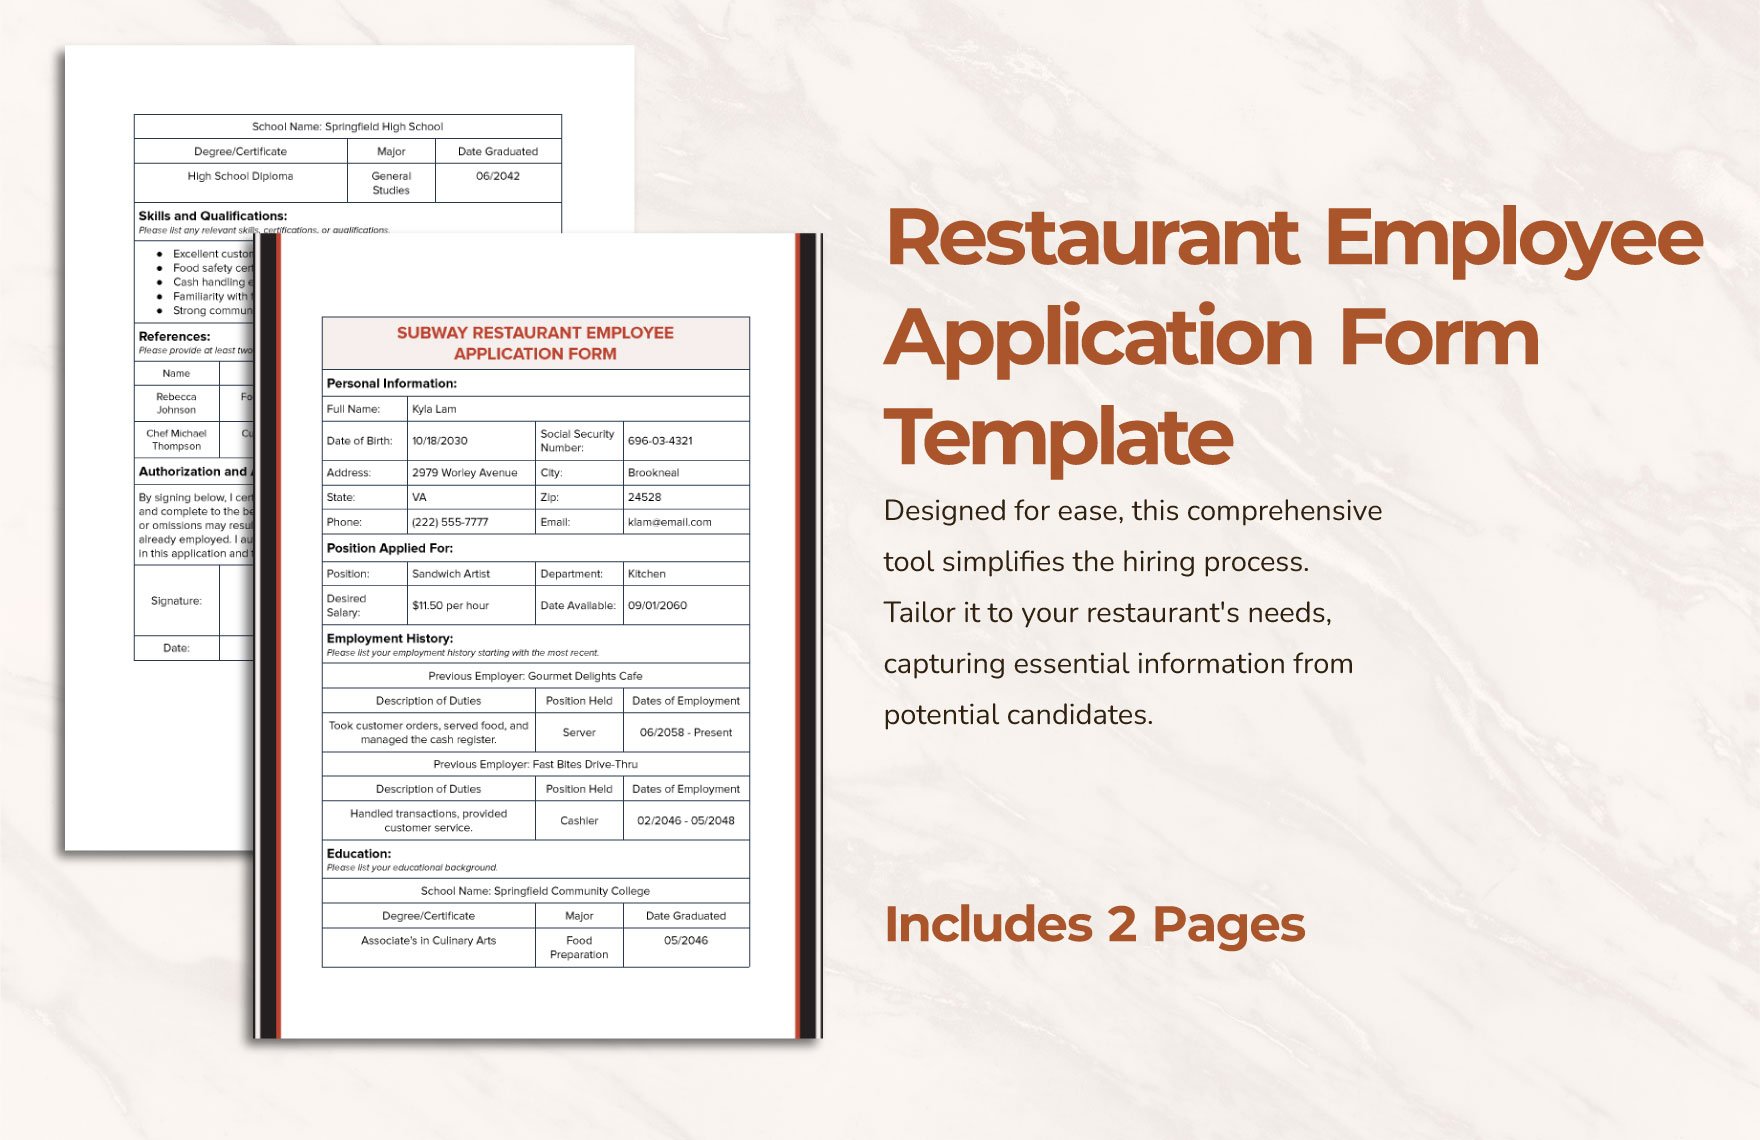 Restaurant Employee Application Form Template